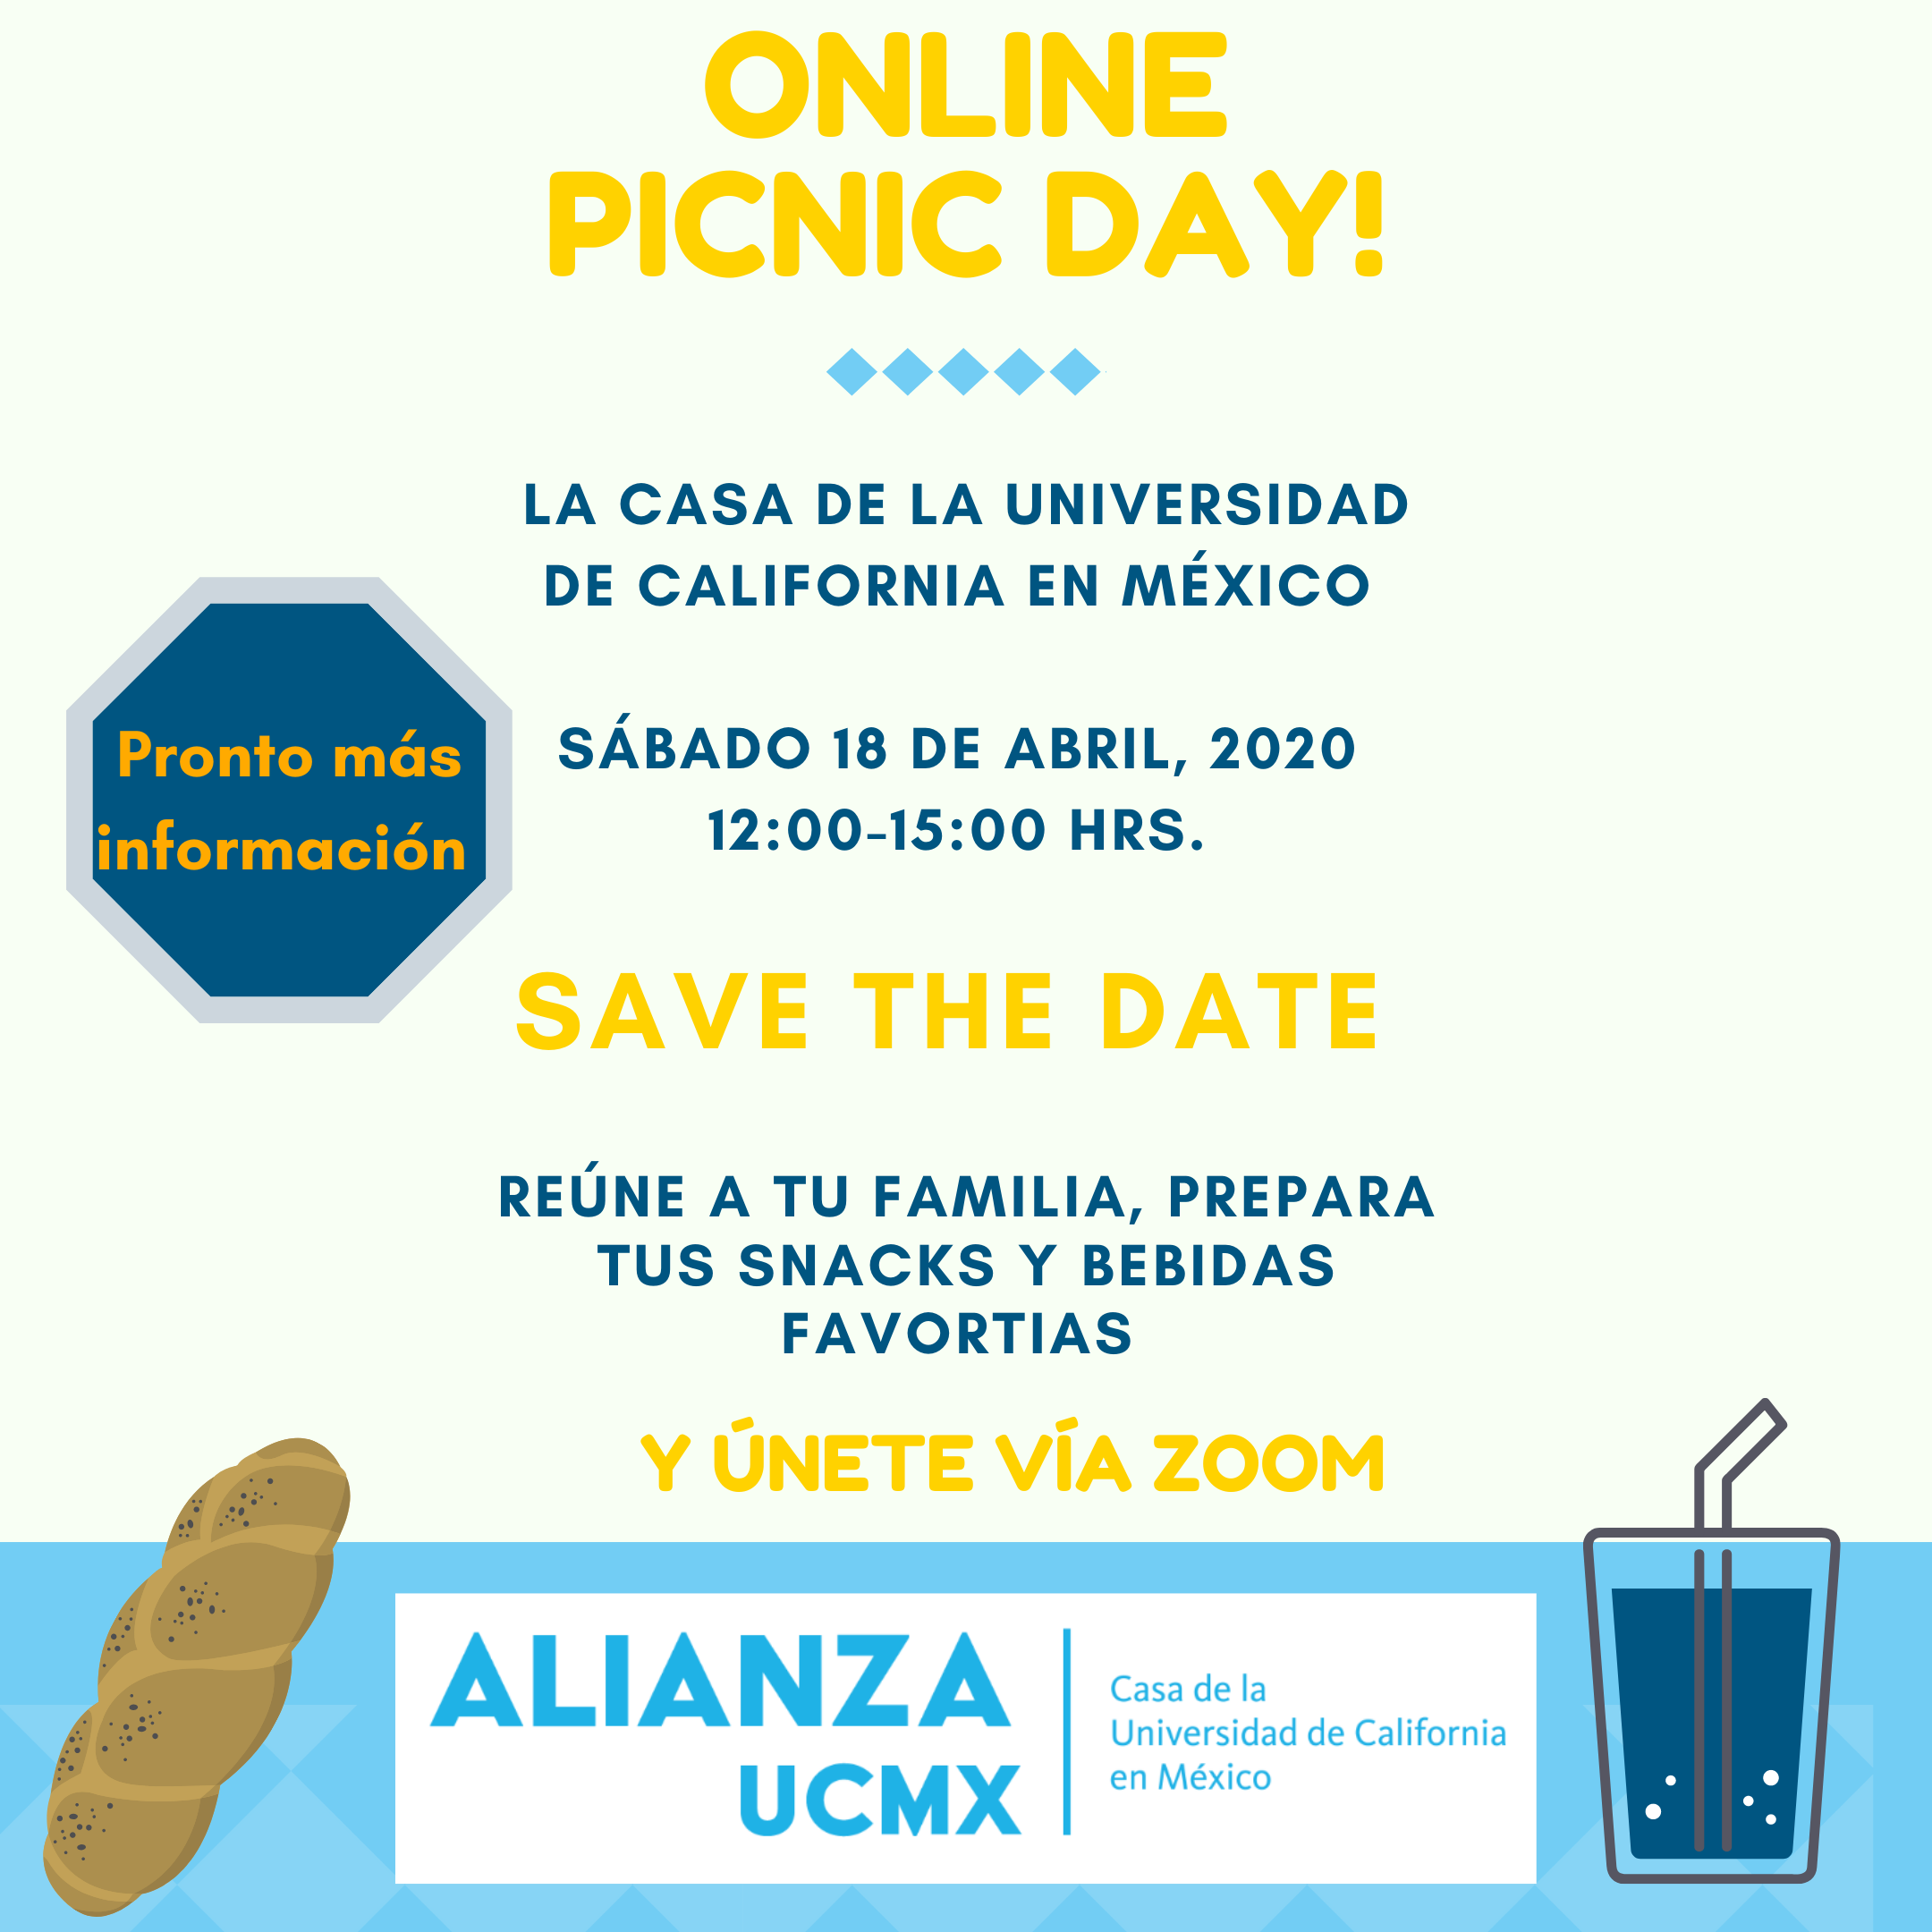 Save the date for online Picnic Day with Casa Universidad de California en Mexico